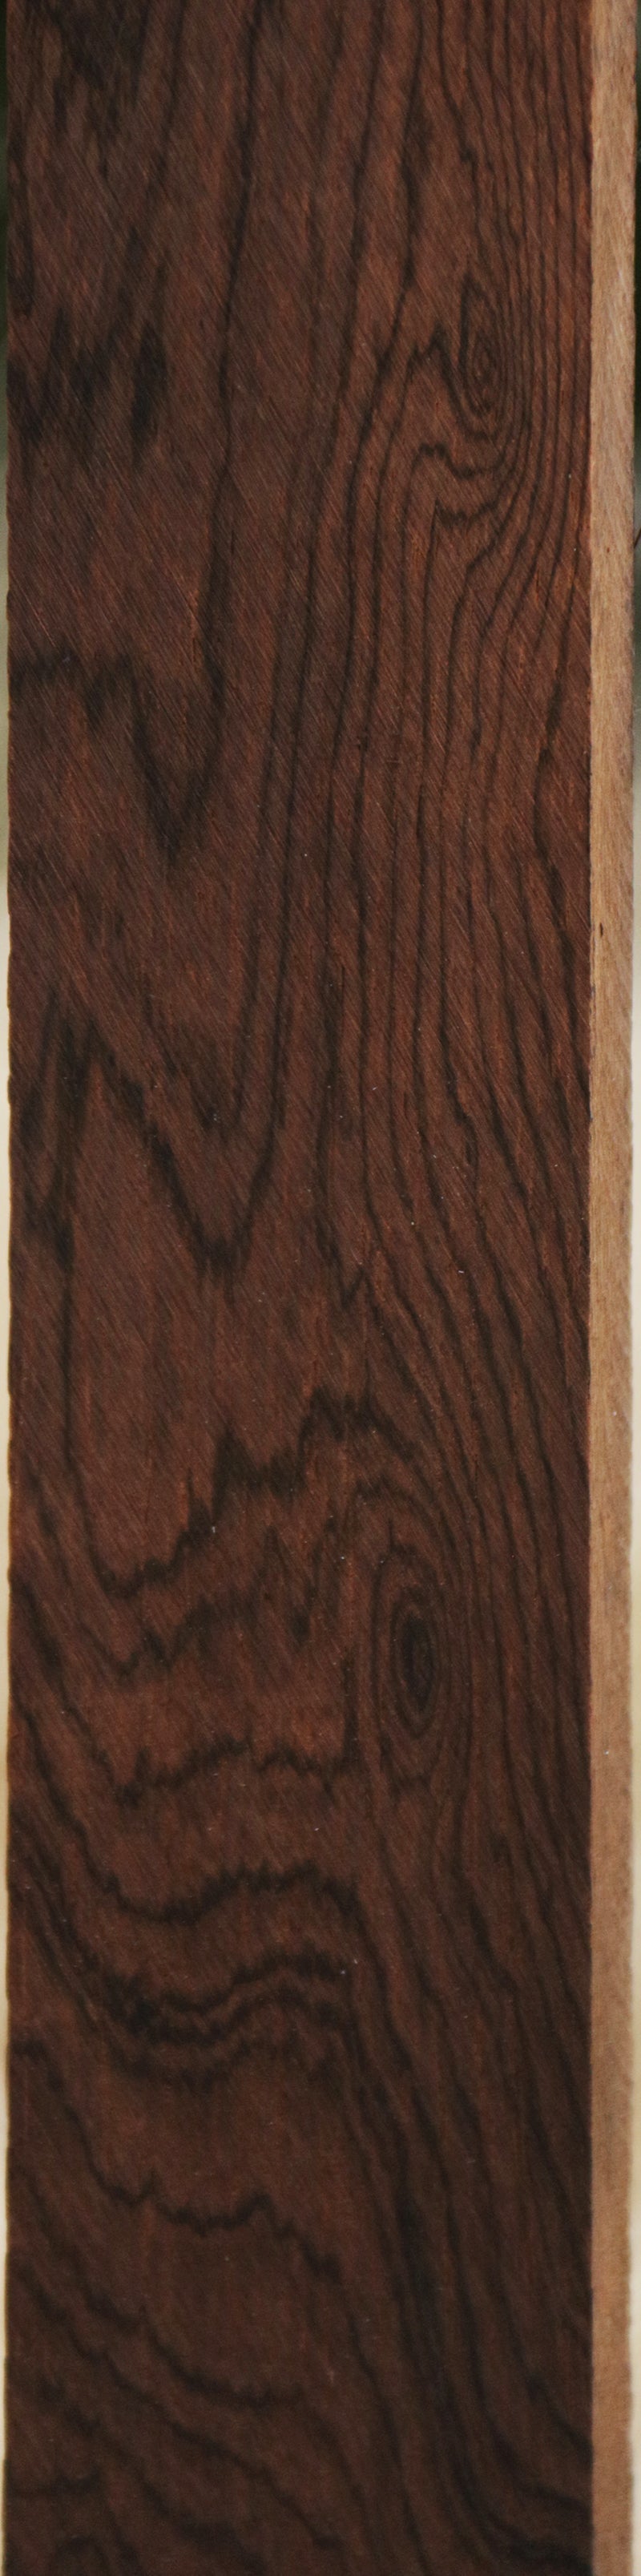 Quartersawn Brazilian Rosewood Lumber